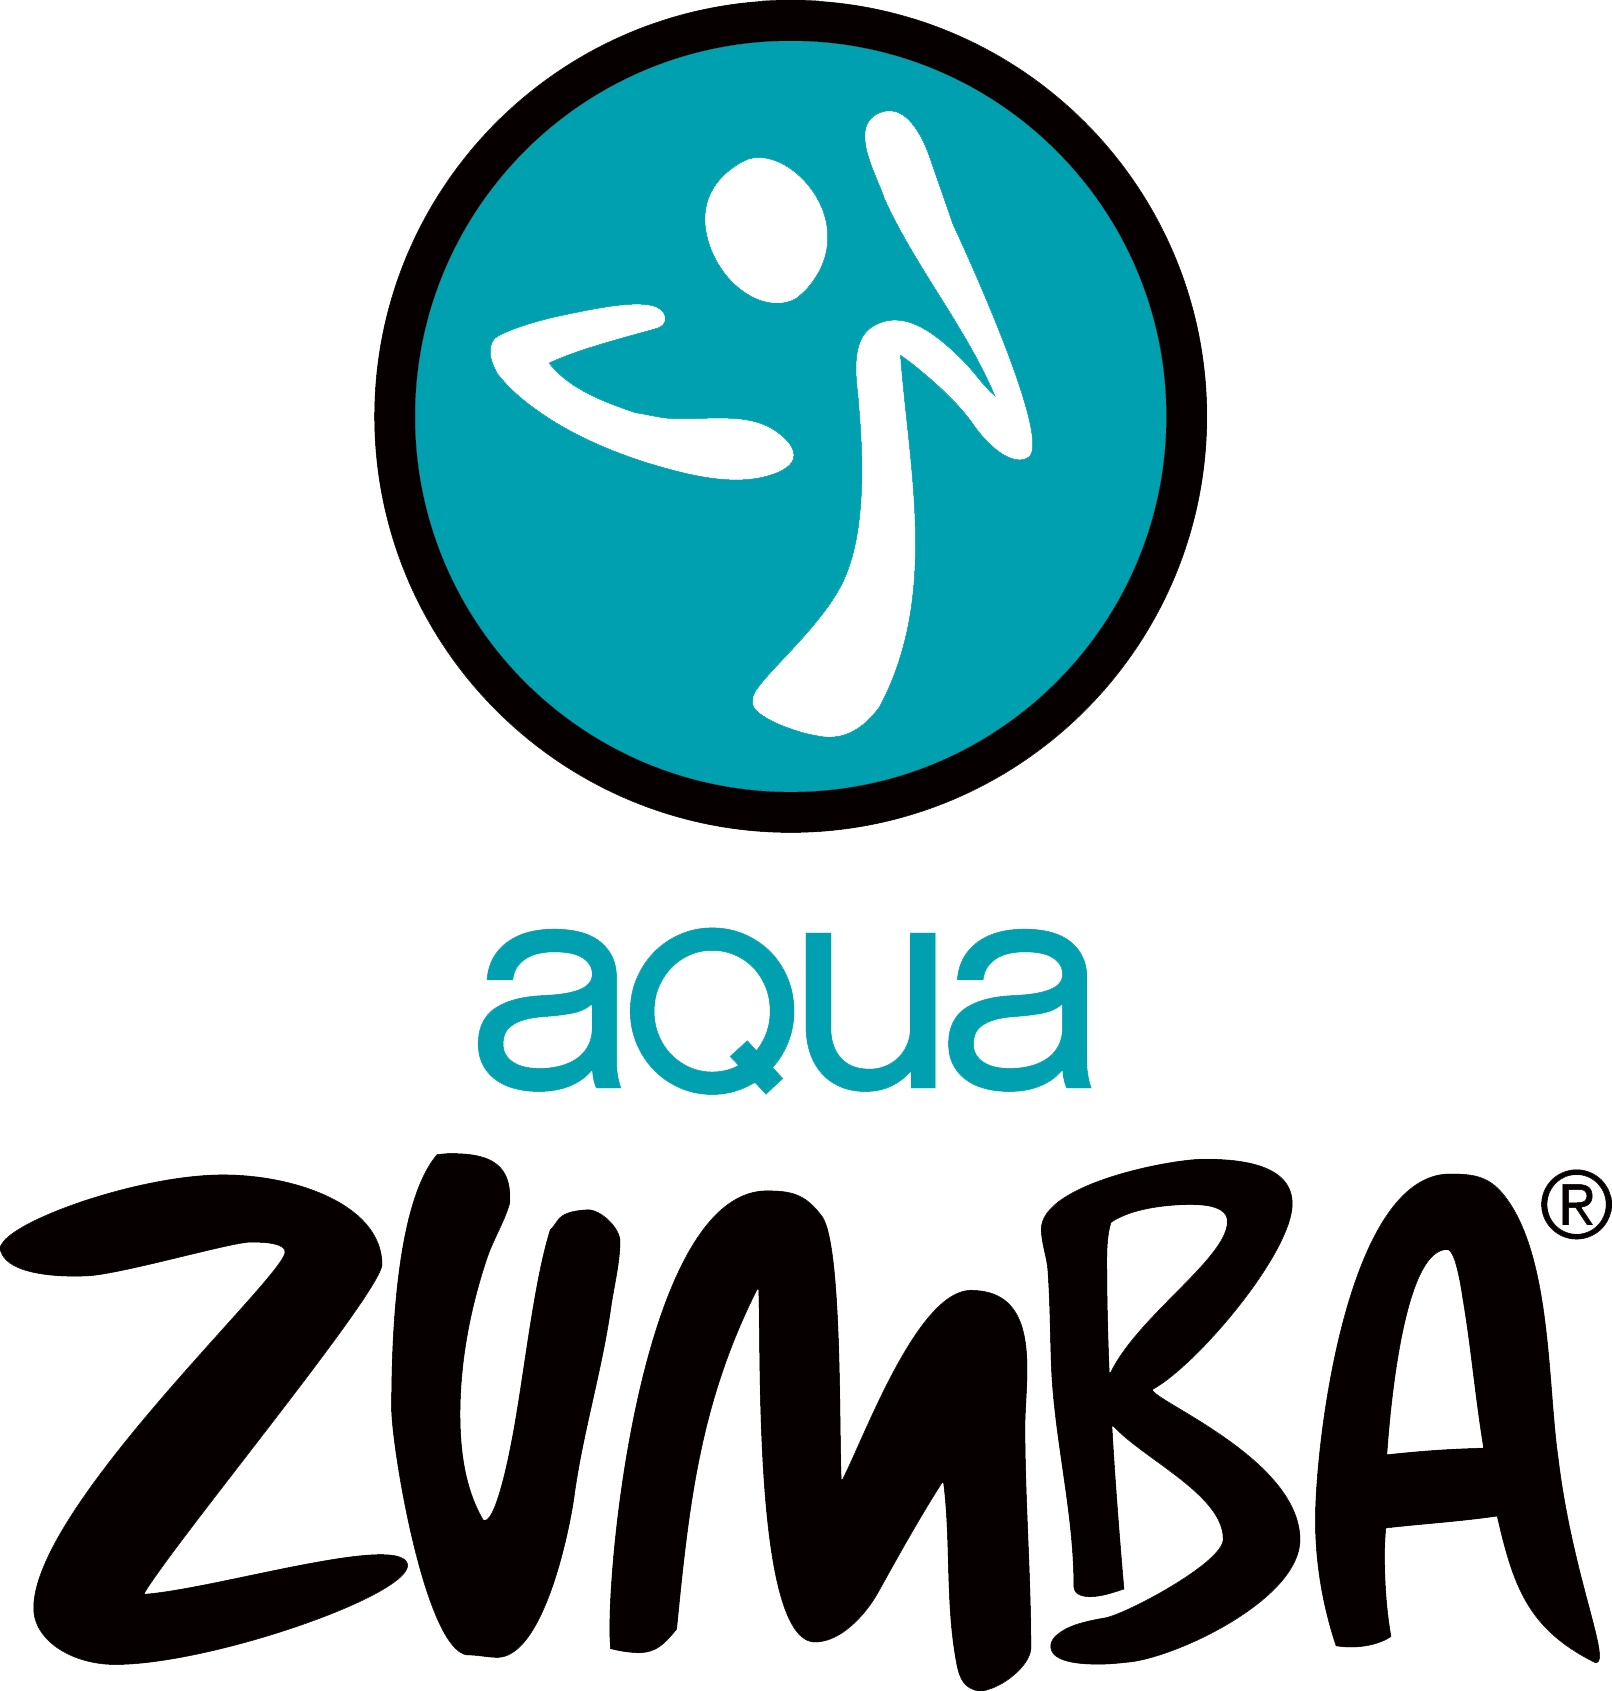 Aqua Zumba Logo PNG